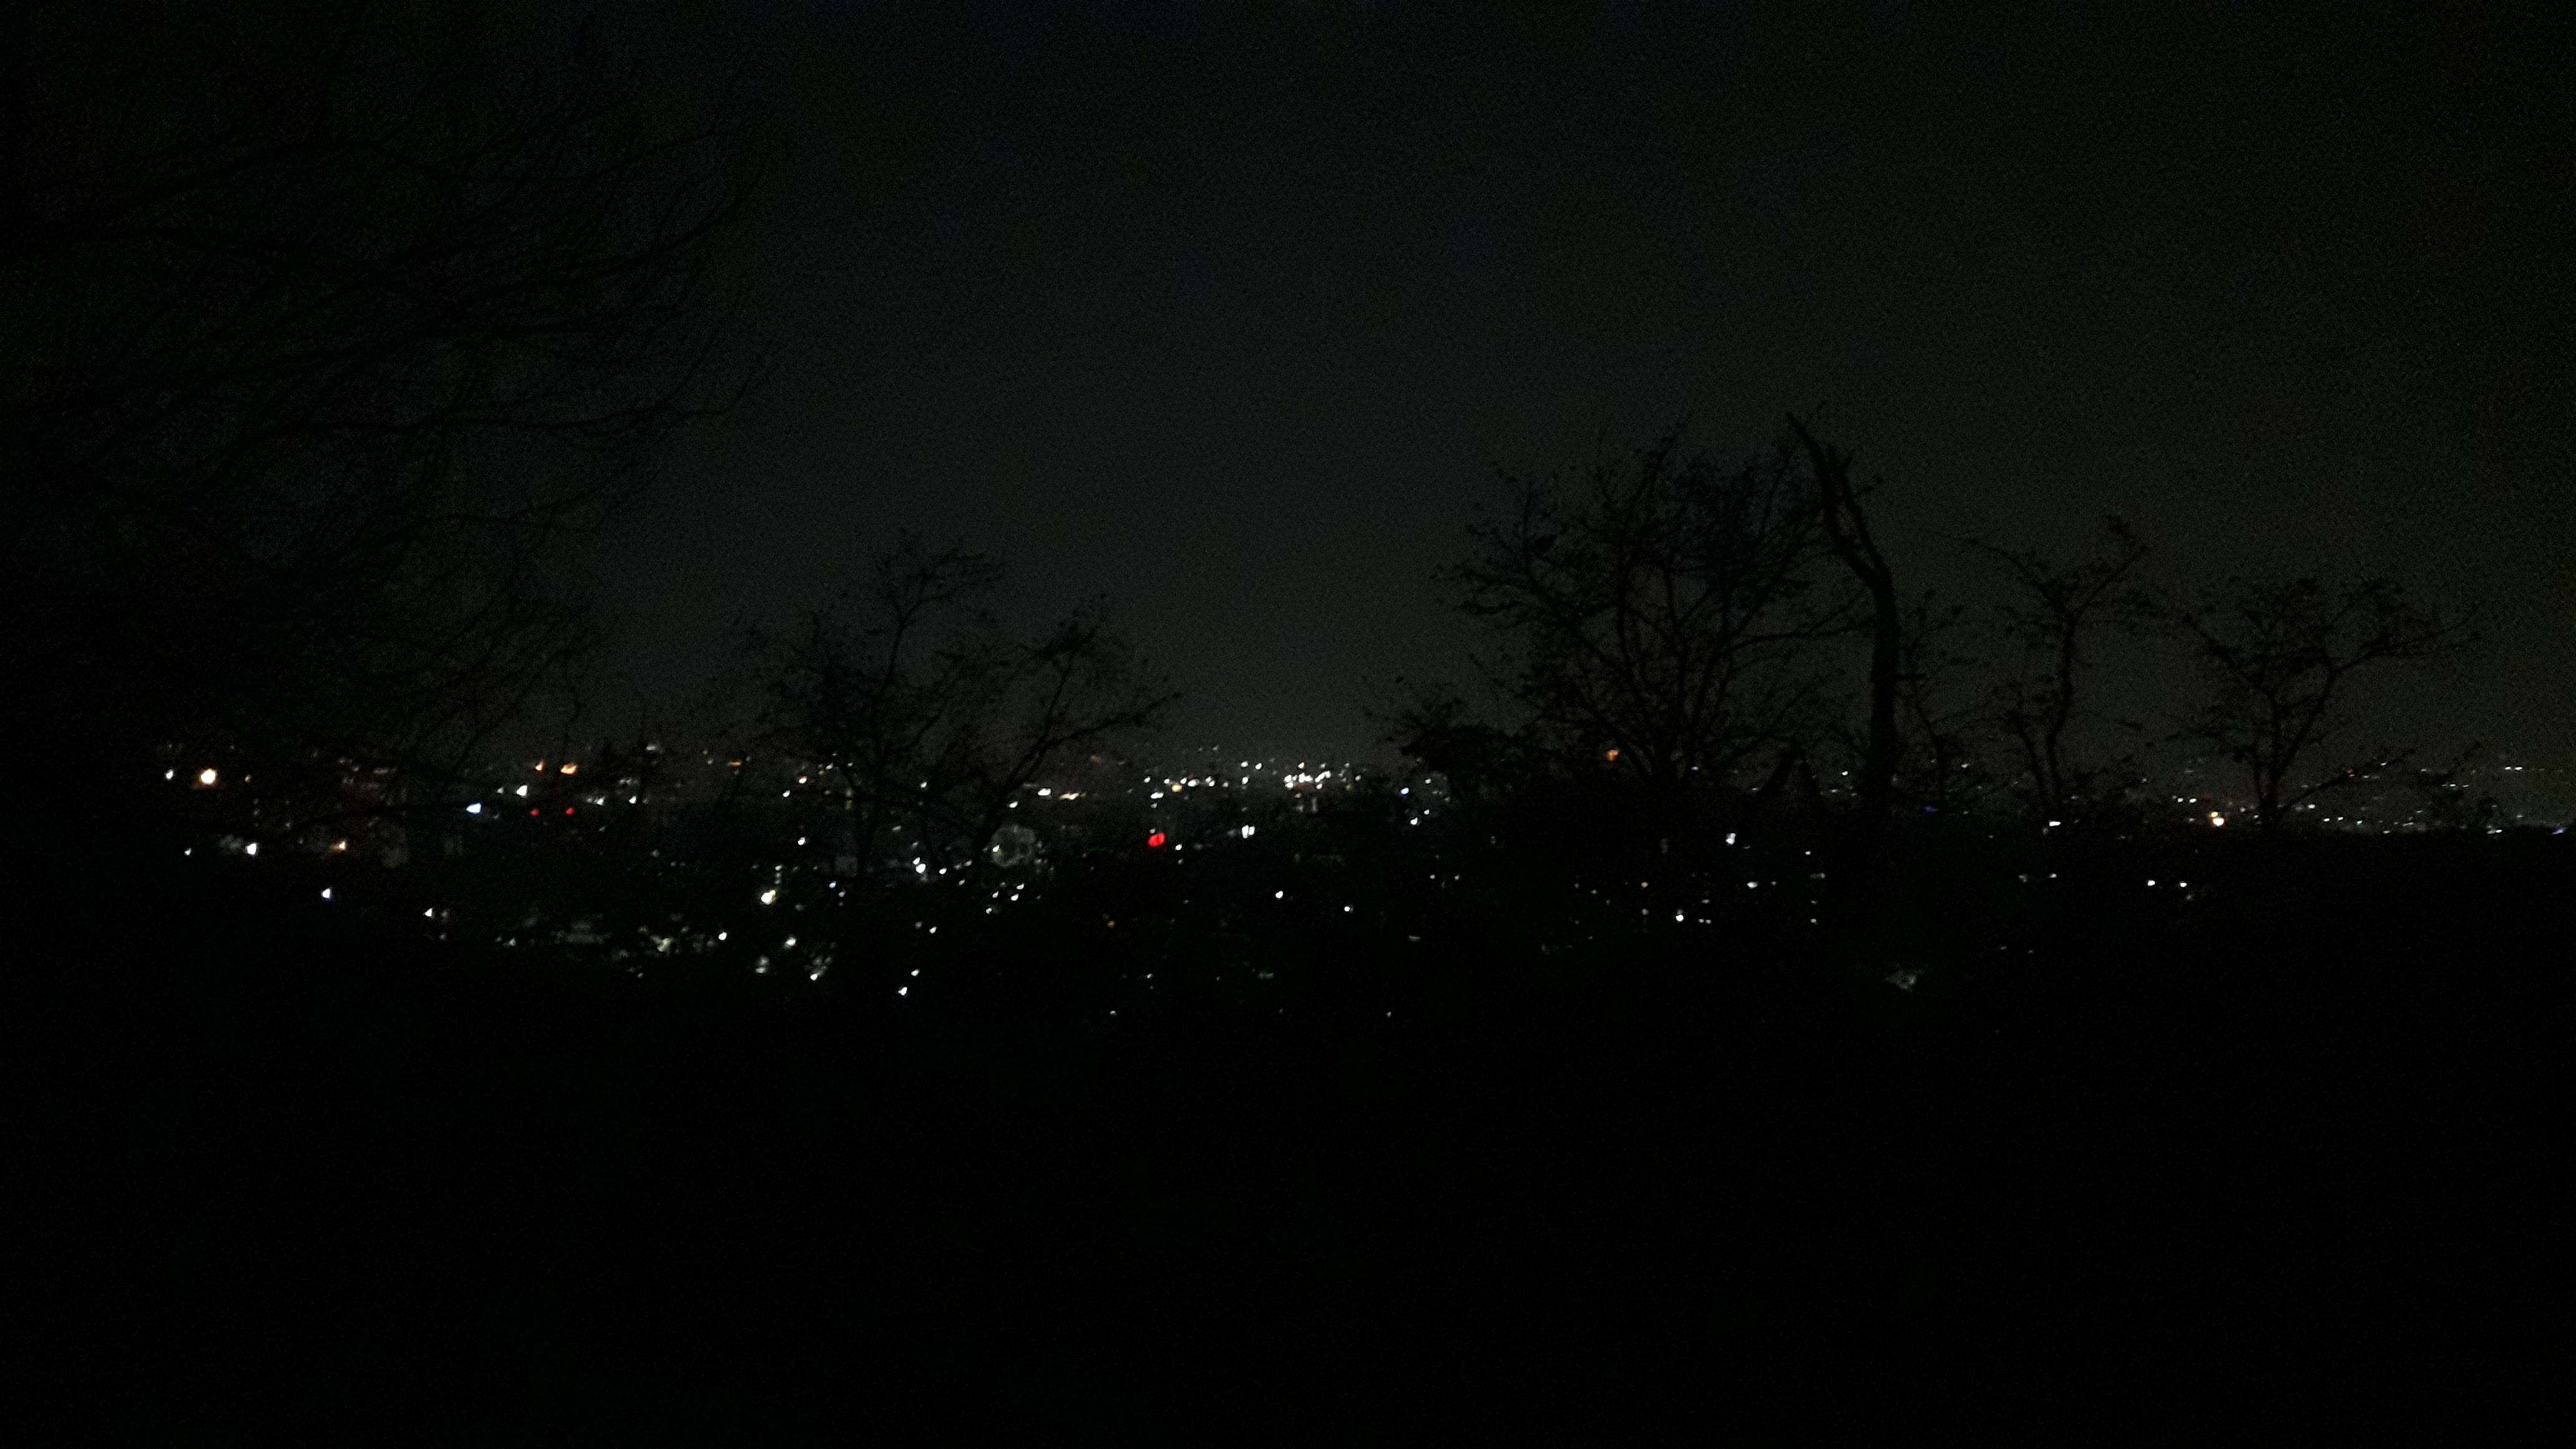 The city at twilight